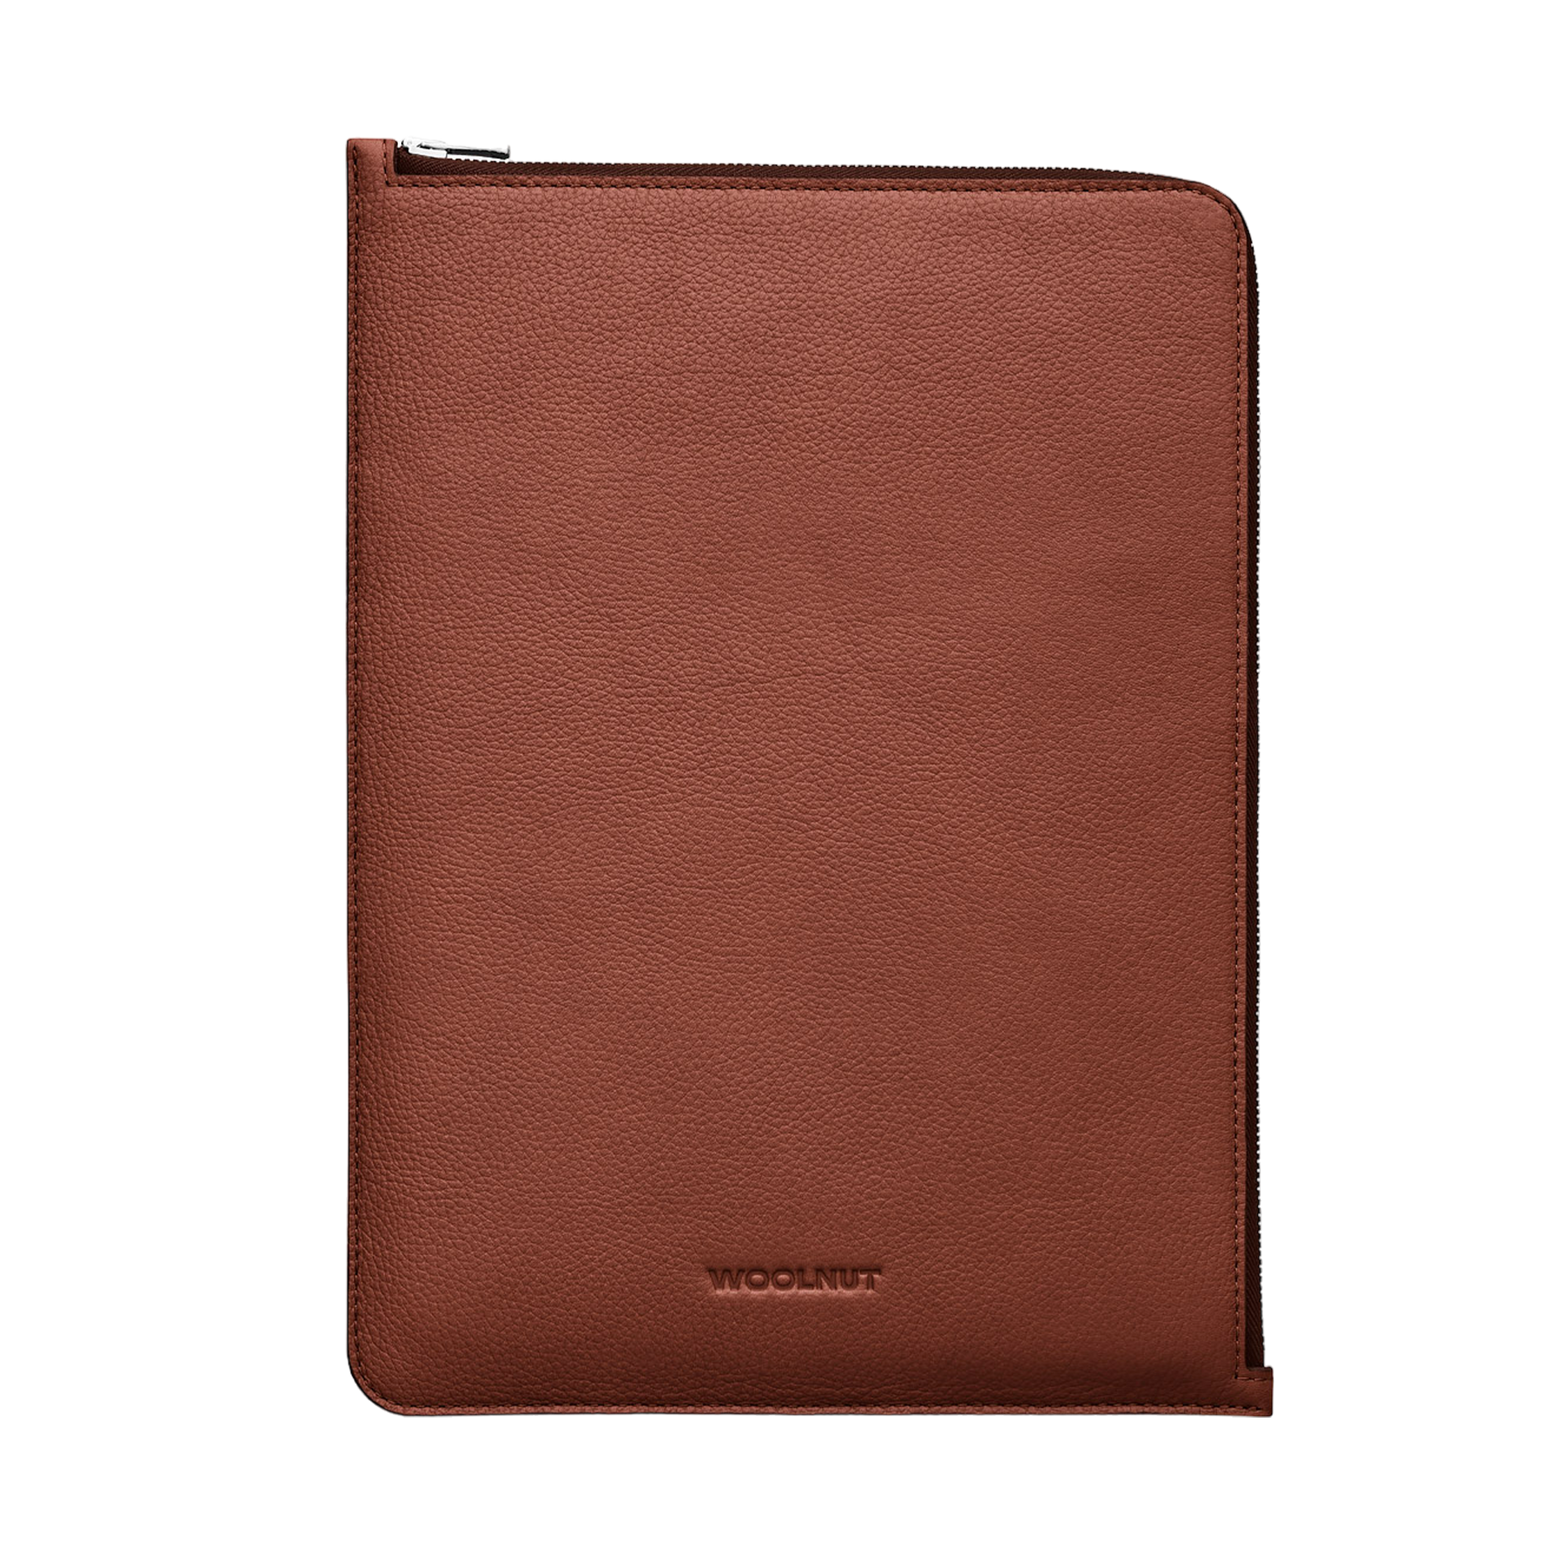 WOOLNUT Leather Folio for 13 / 14-inch MacBook - Cognac